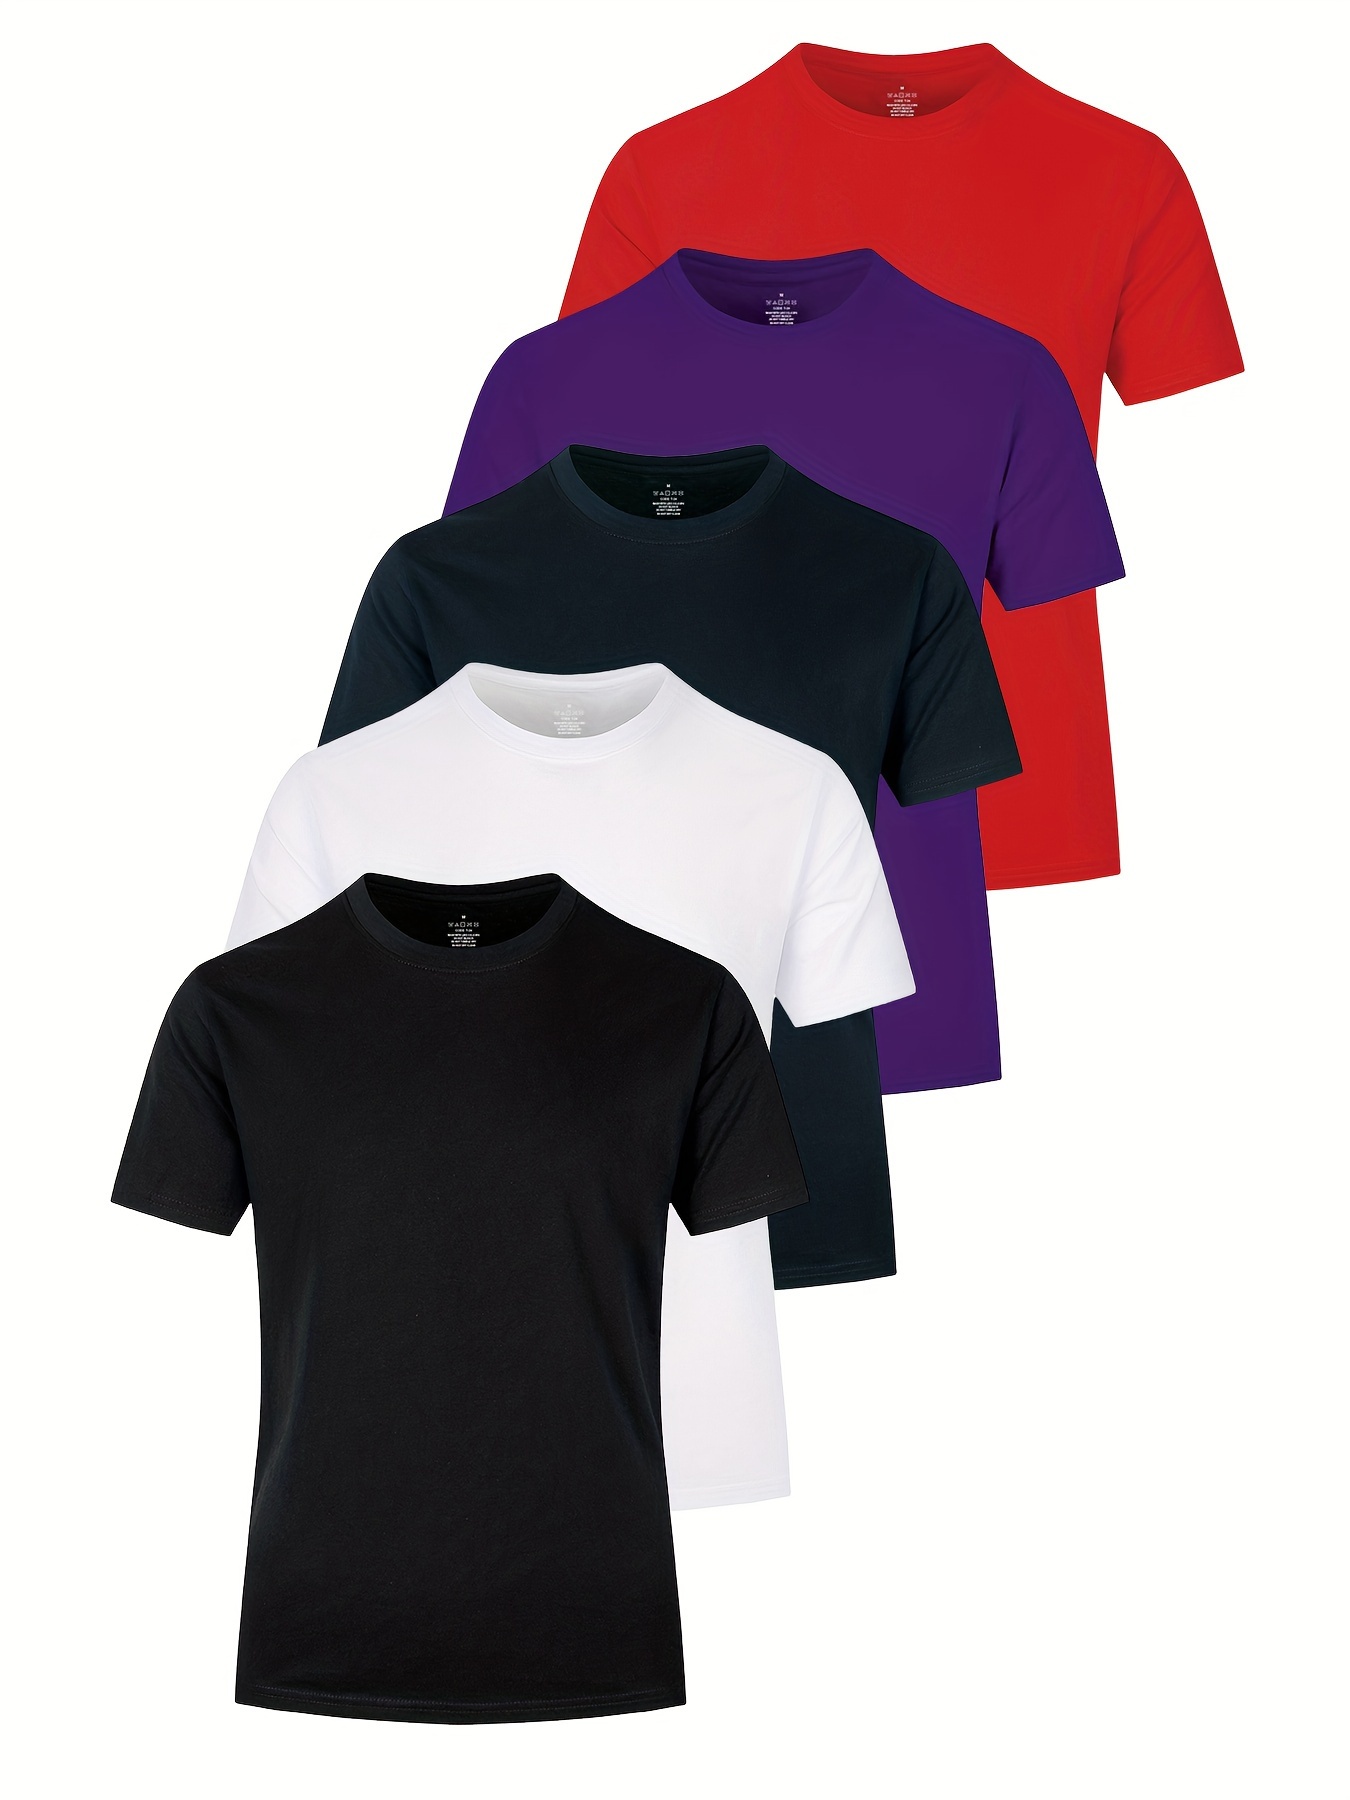 Solid Crew Neck Basic Tees, T-Shirt, Men's Cotton Basics Summer 5pcs Multi Color Comfy Casual Set Sports Tees,Casual,Temu